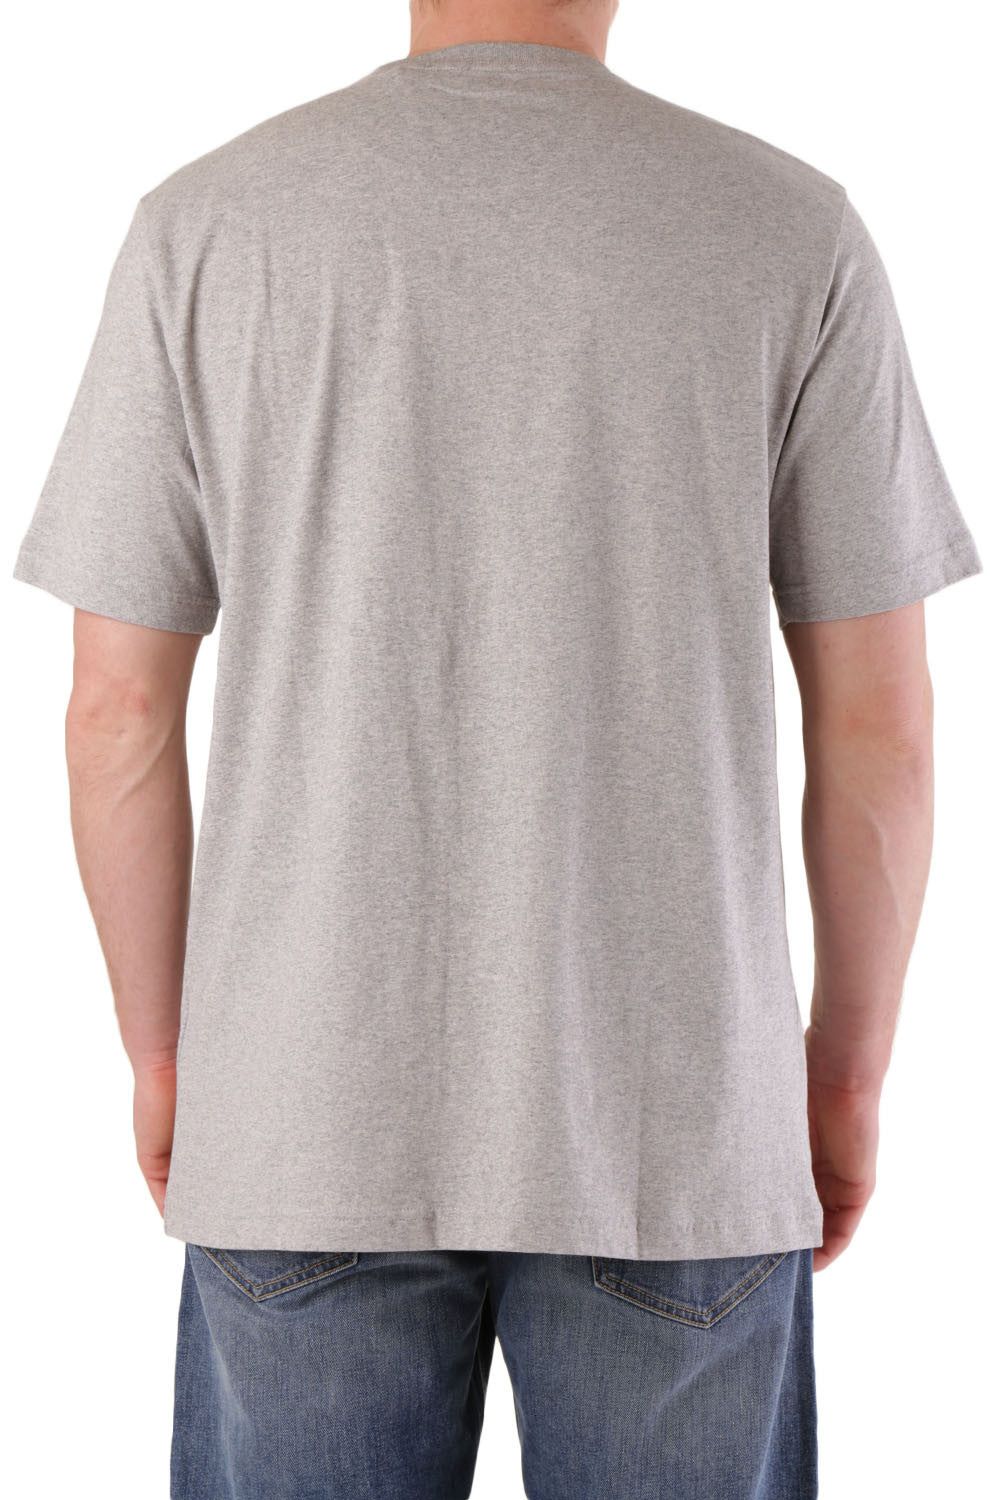 Brand: Diesel   Gender: Men   Type: T-shirts   Color: Grey   Pattern: Print   Neckline: Round Neck   Sleeves: Short Sleeve   Season: Spring/summer